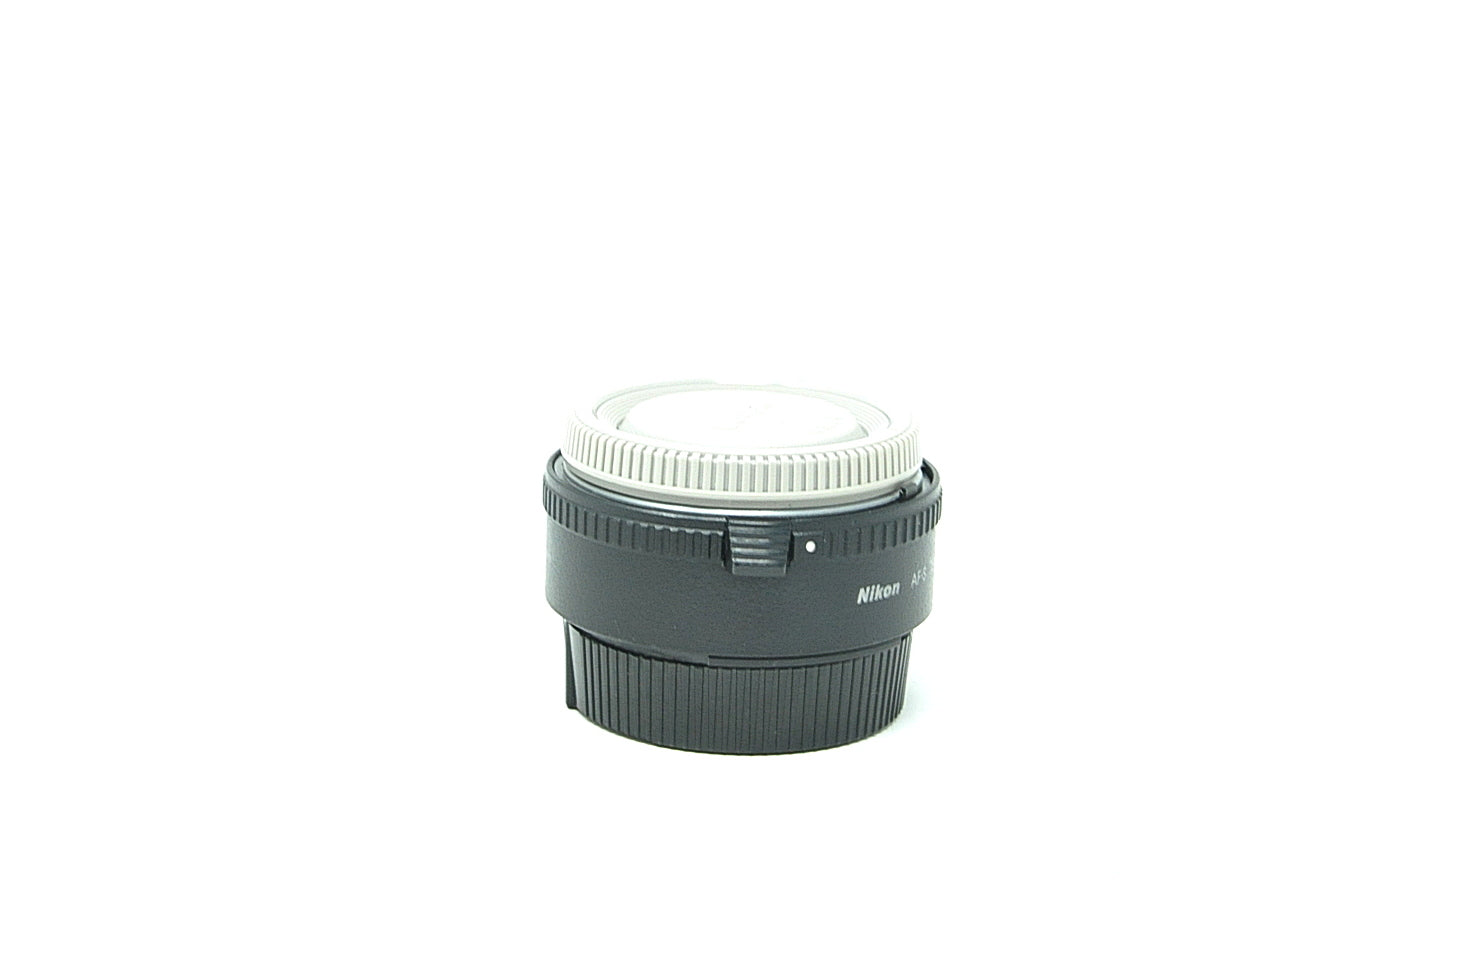 Used Nikon AF-S Teleconverter TC-14EII (Boxed SH39838)